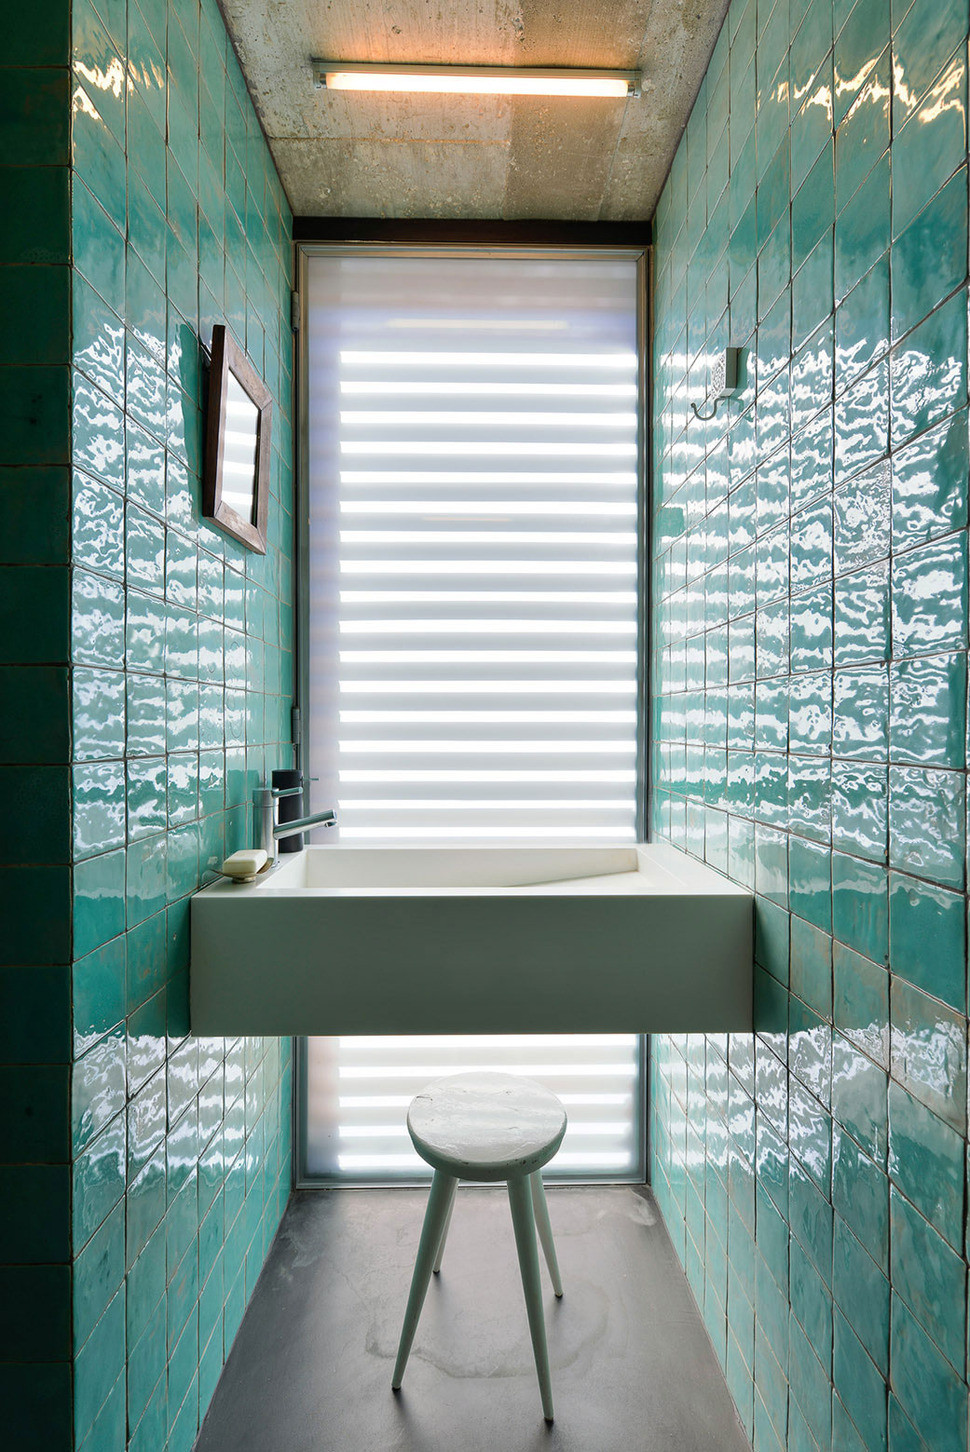 Bathroom Shower Tile Gallery
 Top 10 Tile Design Ideas for a Modern Bathroom for 2015